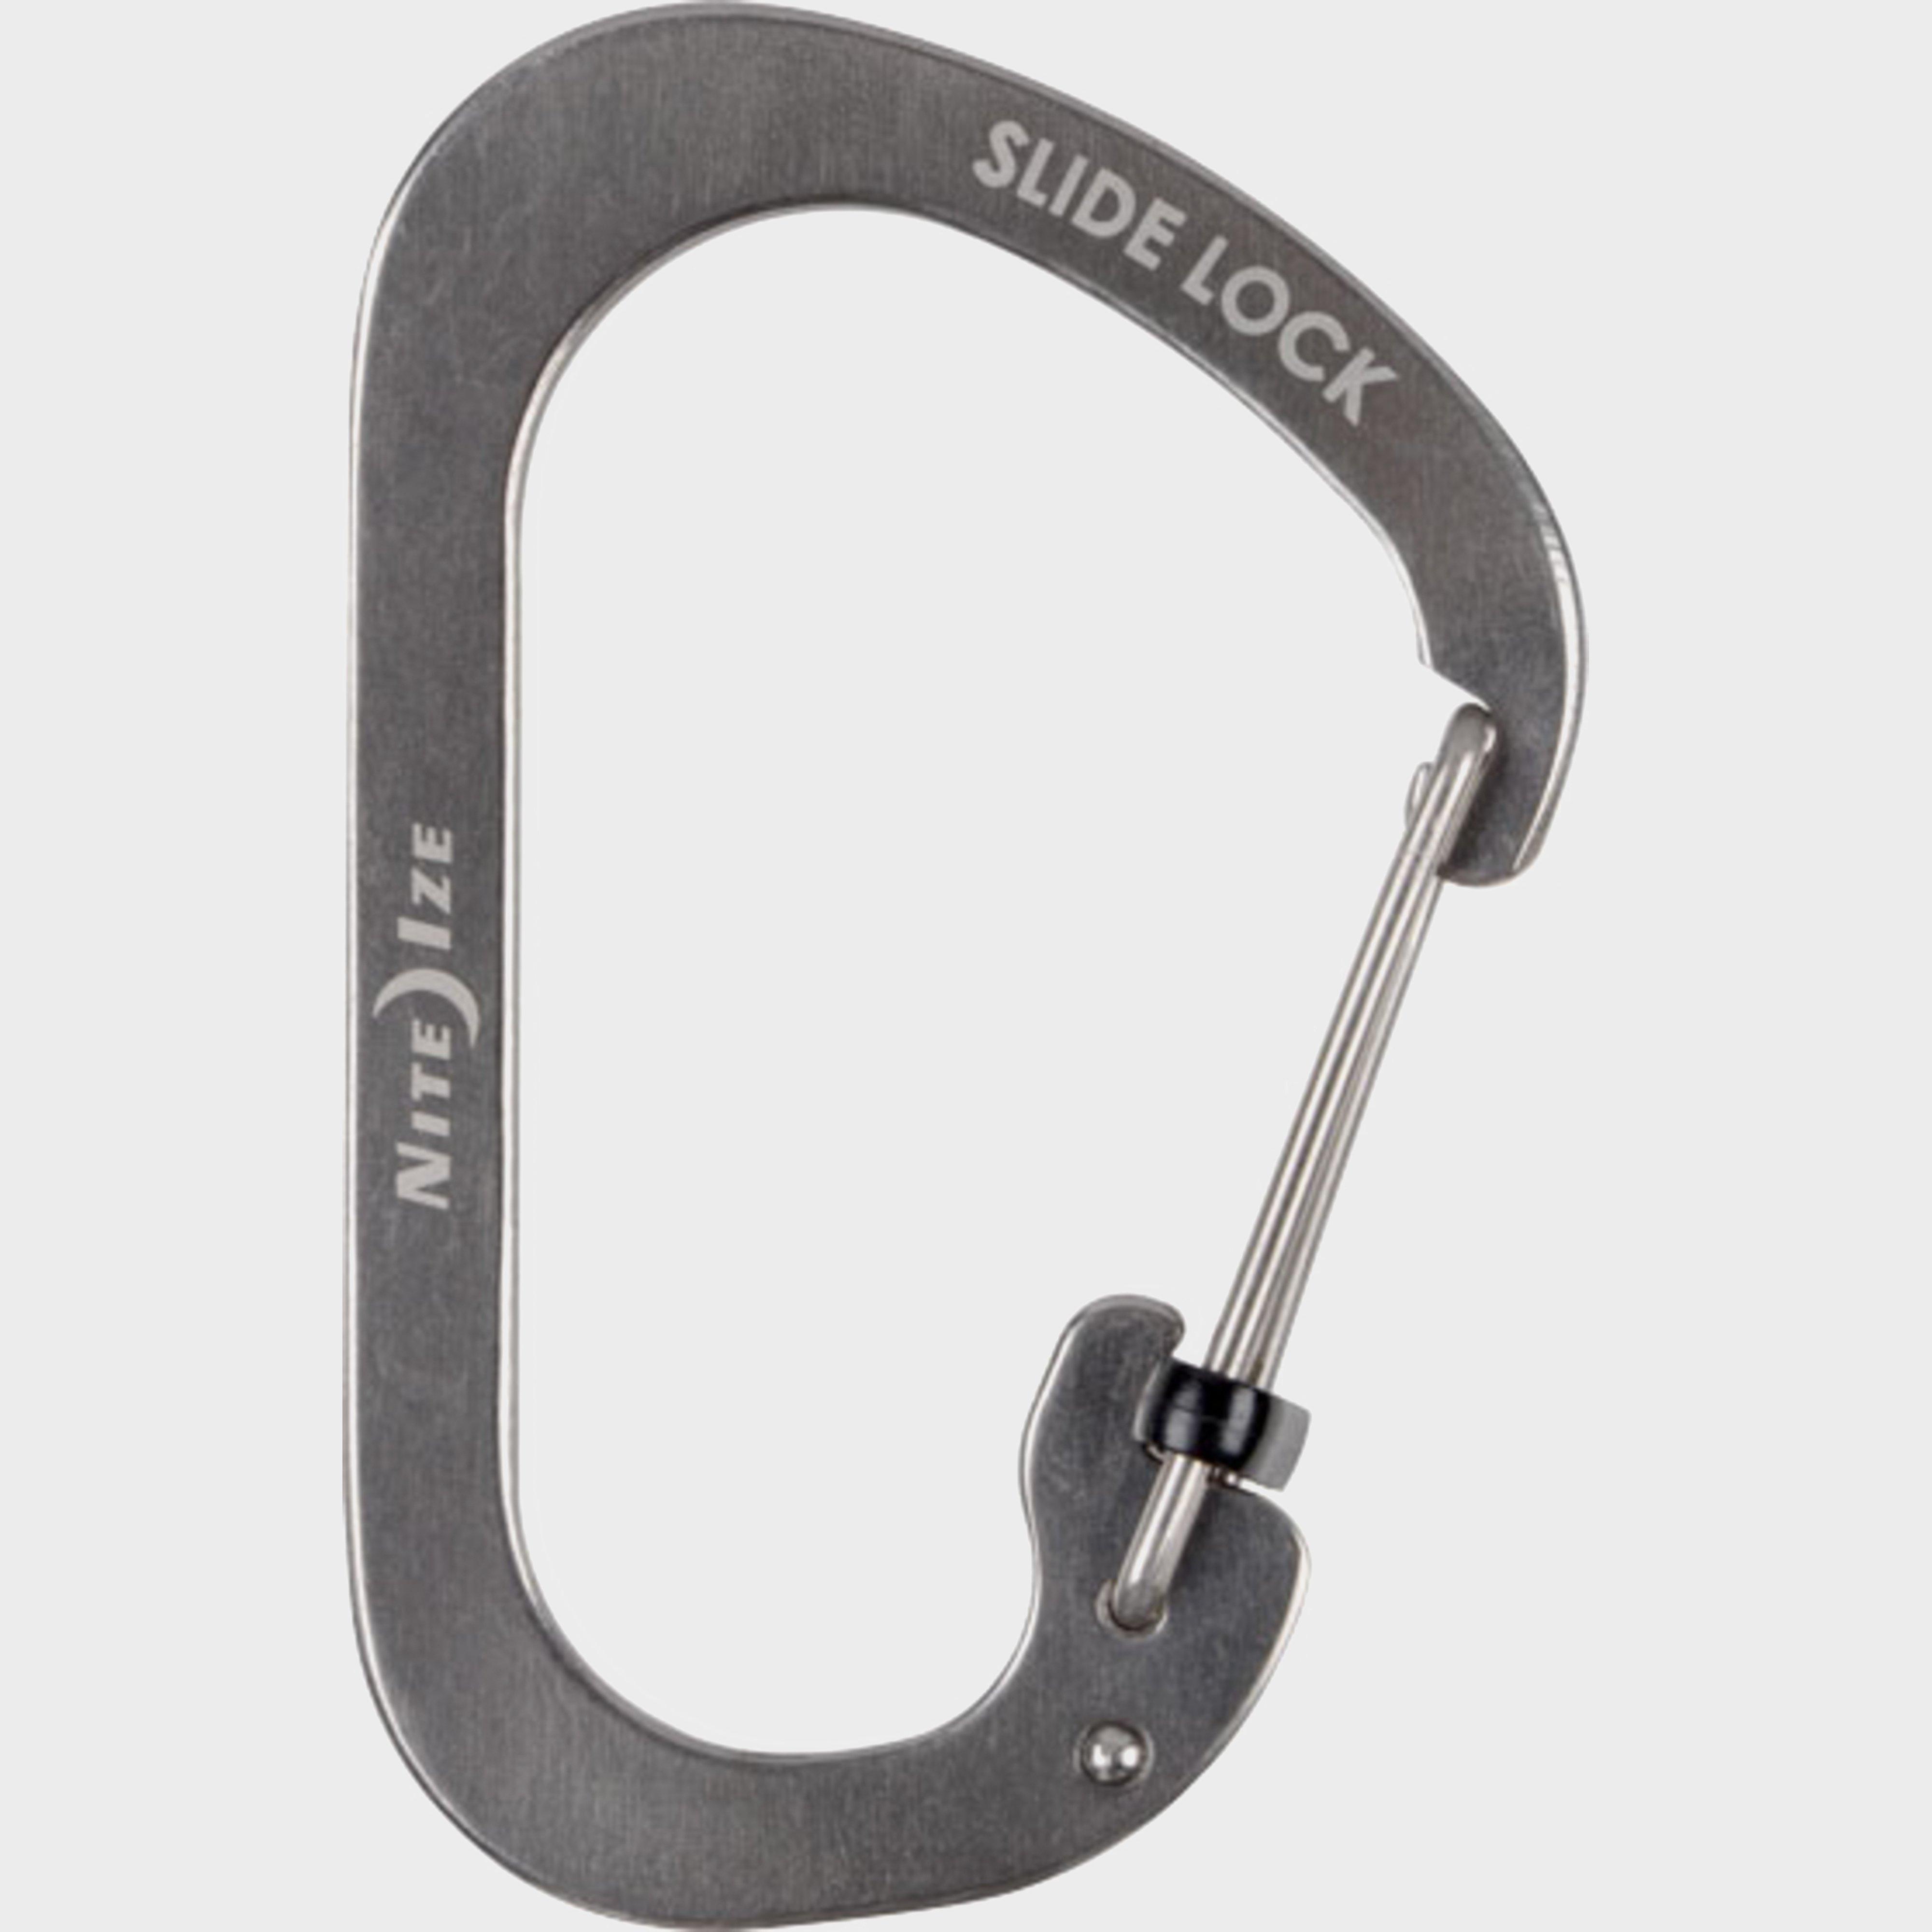 Niteize Slidelock Carabiner #4 (stainless Steel) - Grey/st  Grey/st